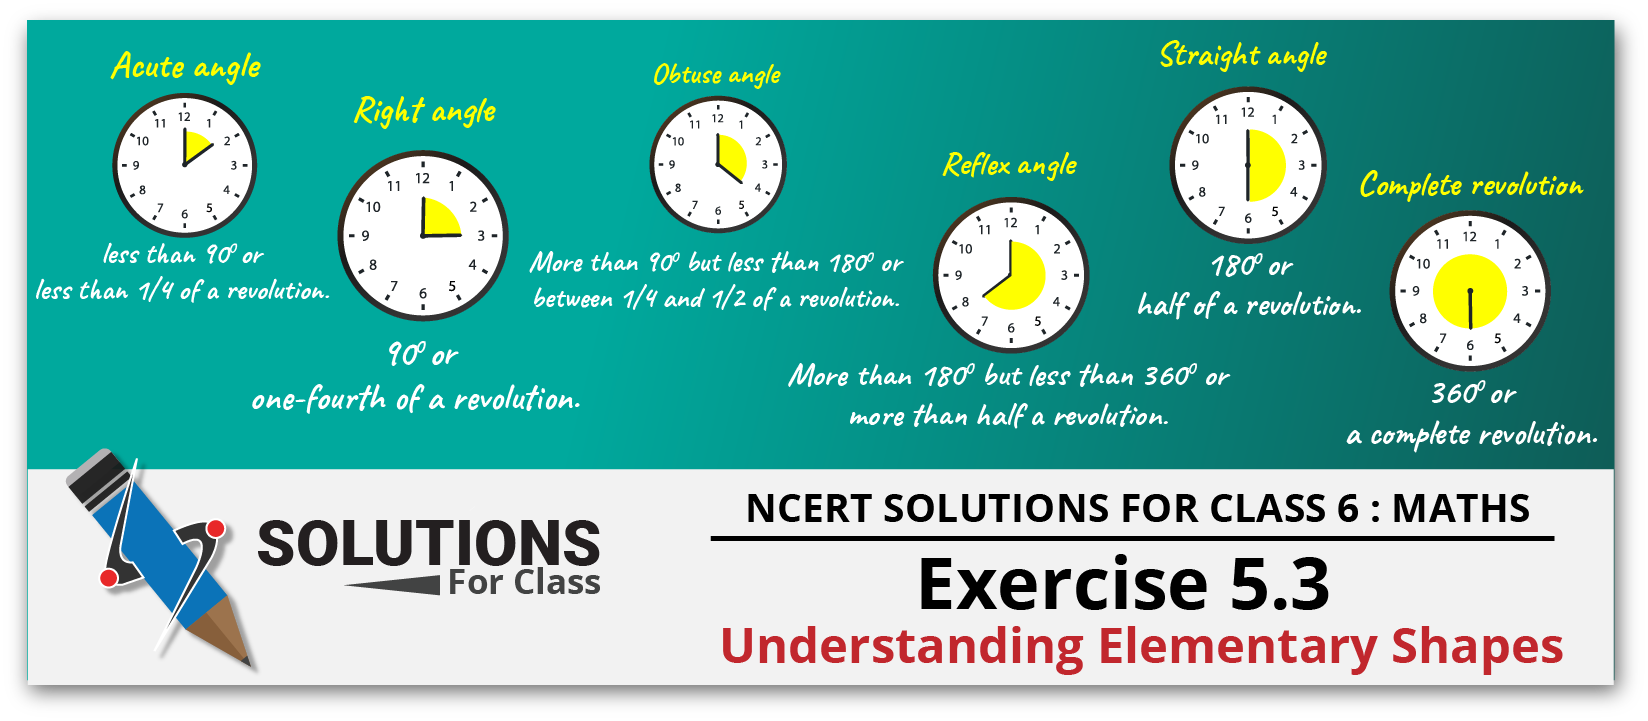 Understanding Elementary Shapes, Exercise 5.3